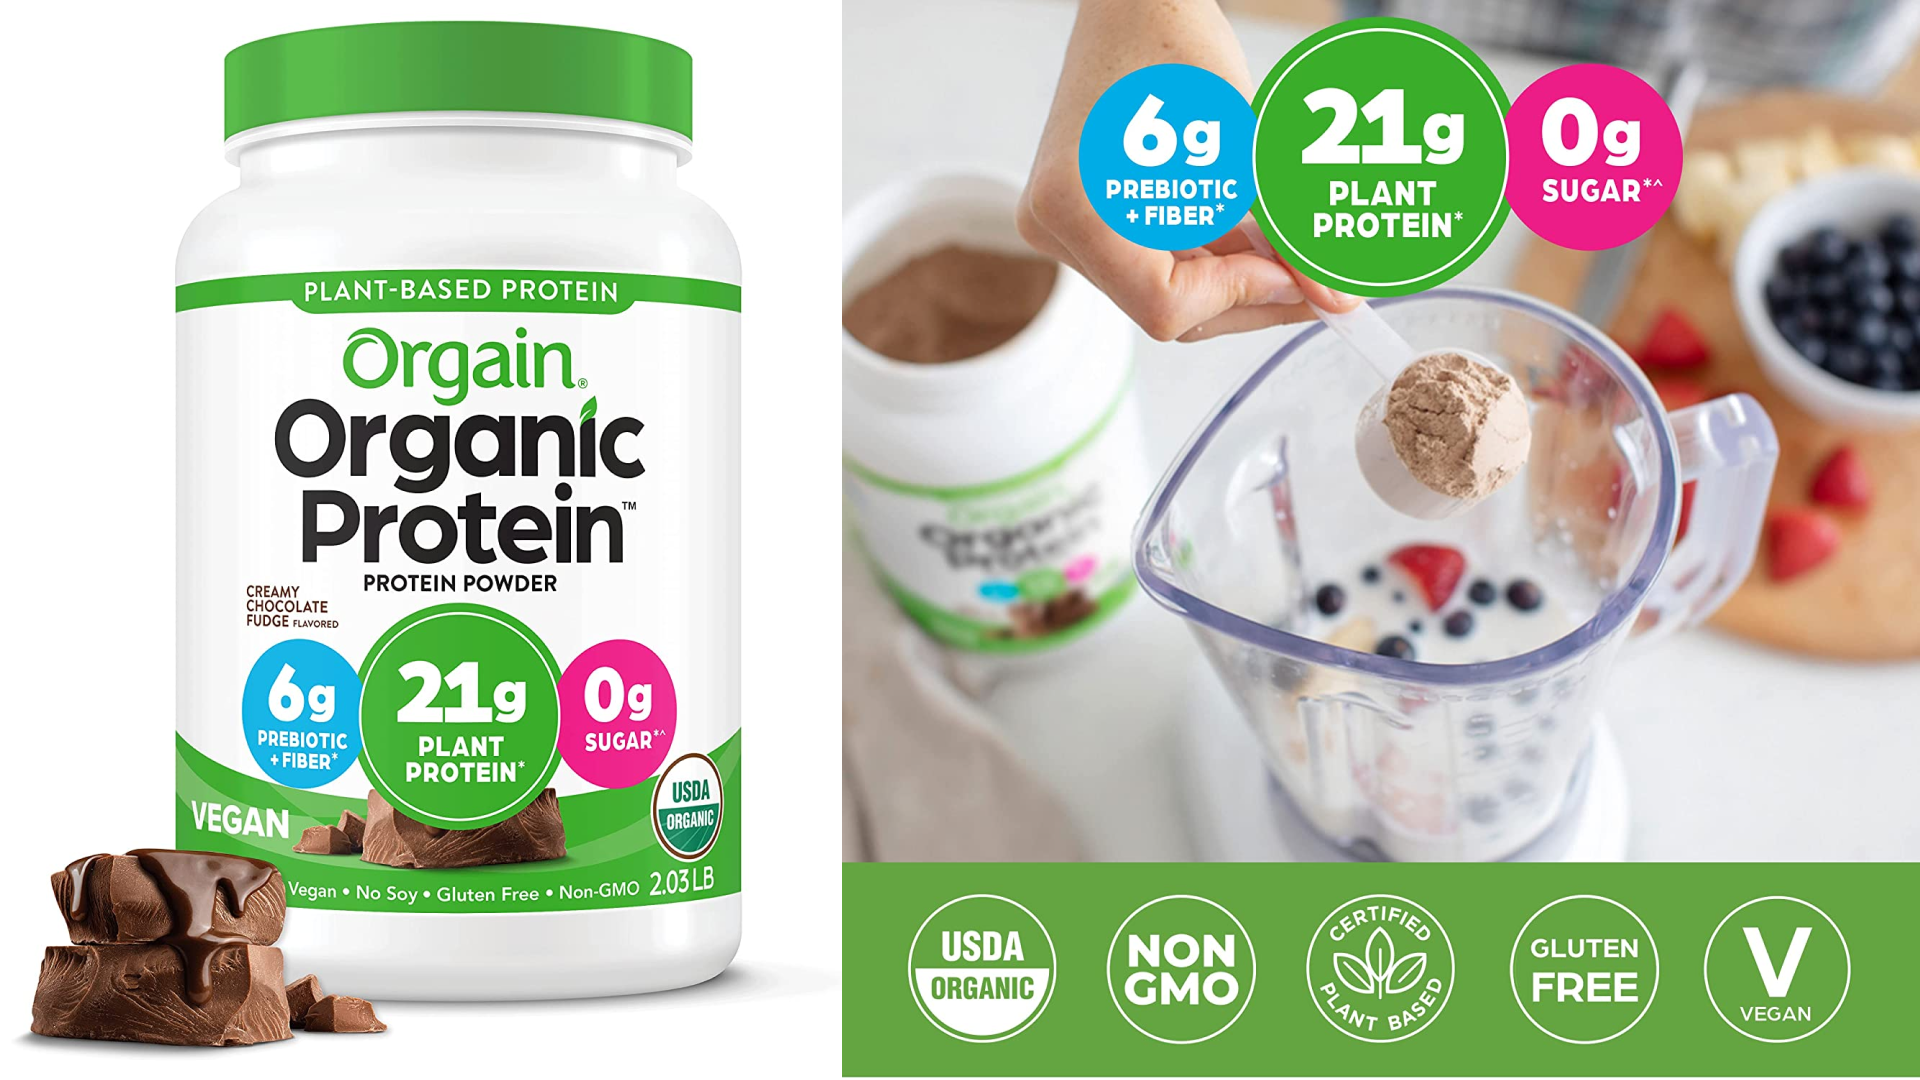 Organic vegan protein powder